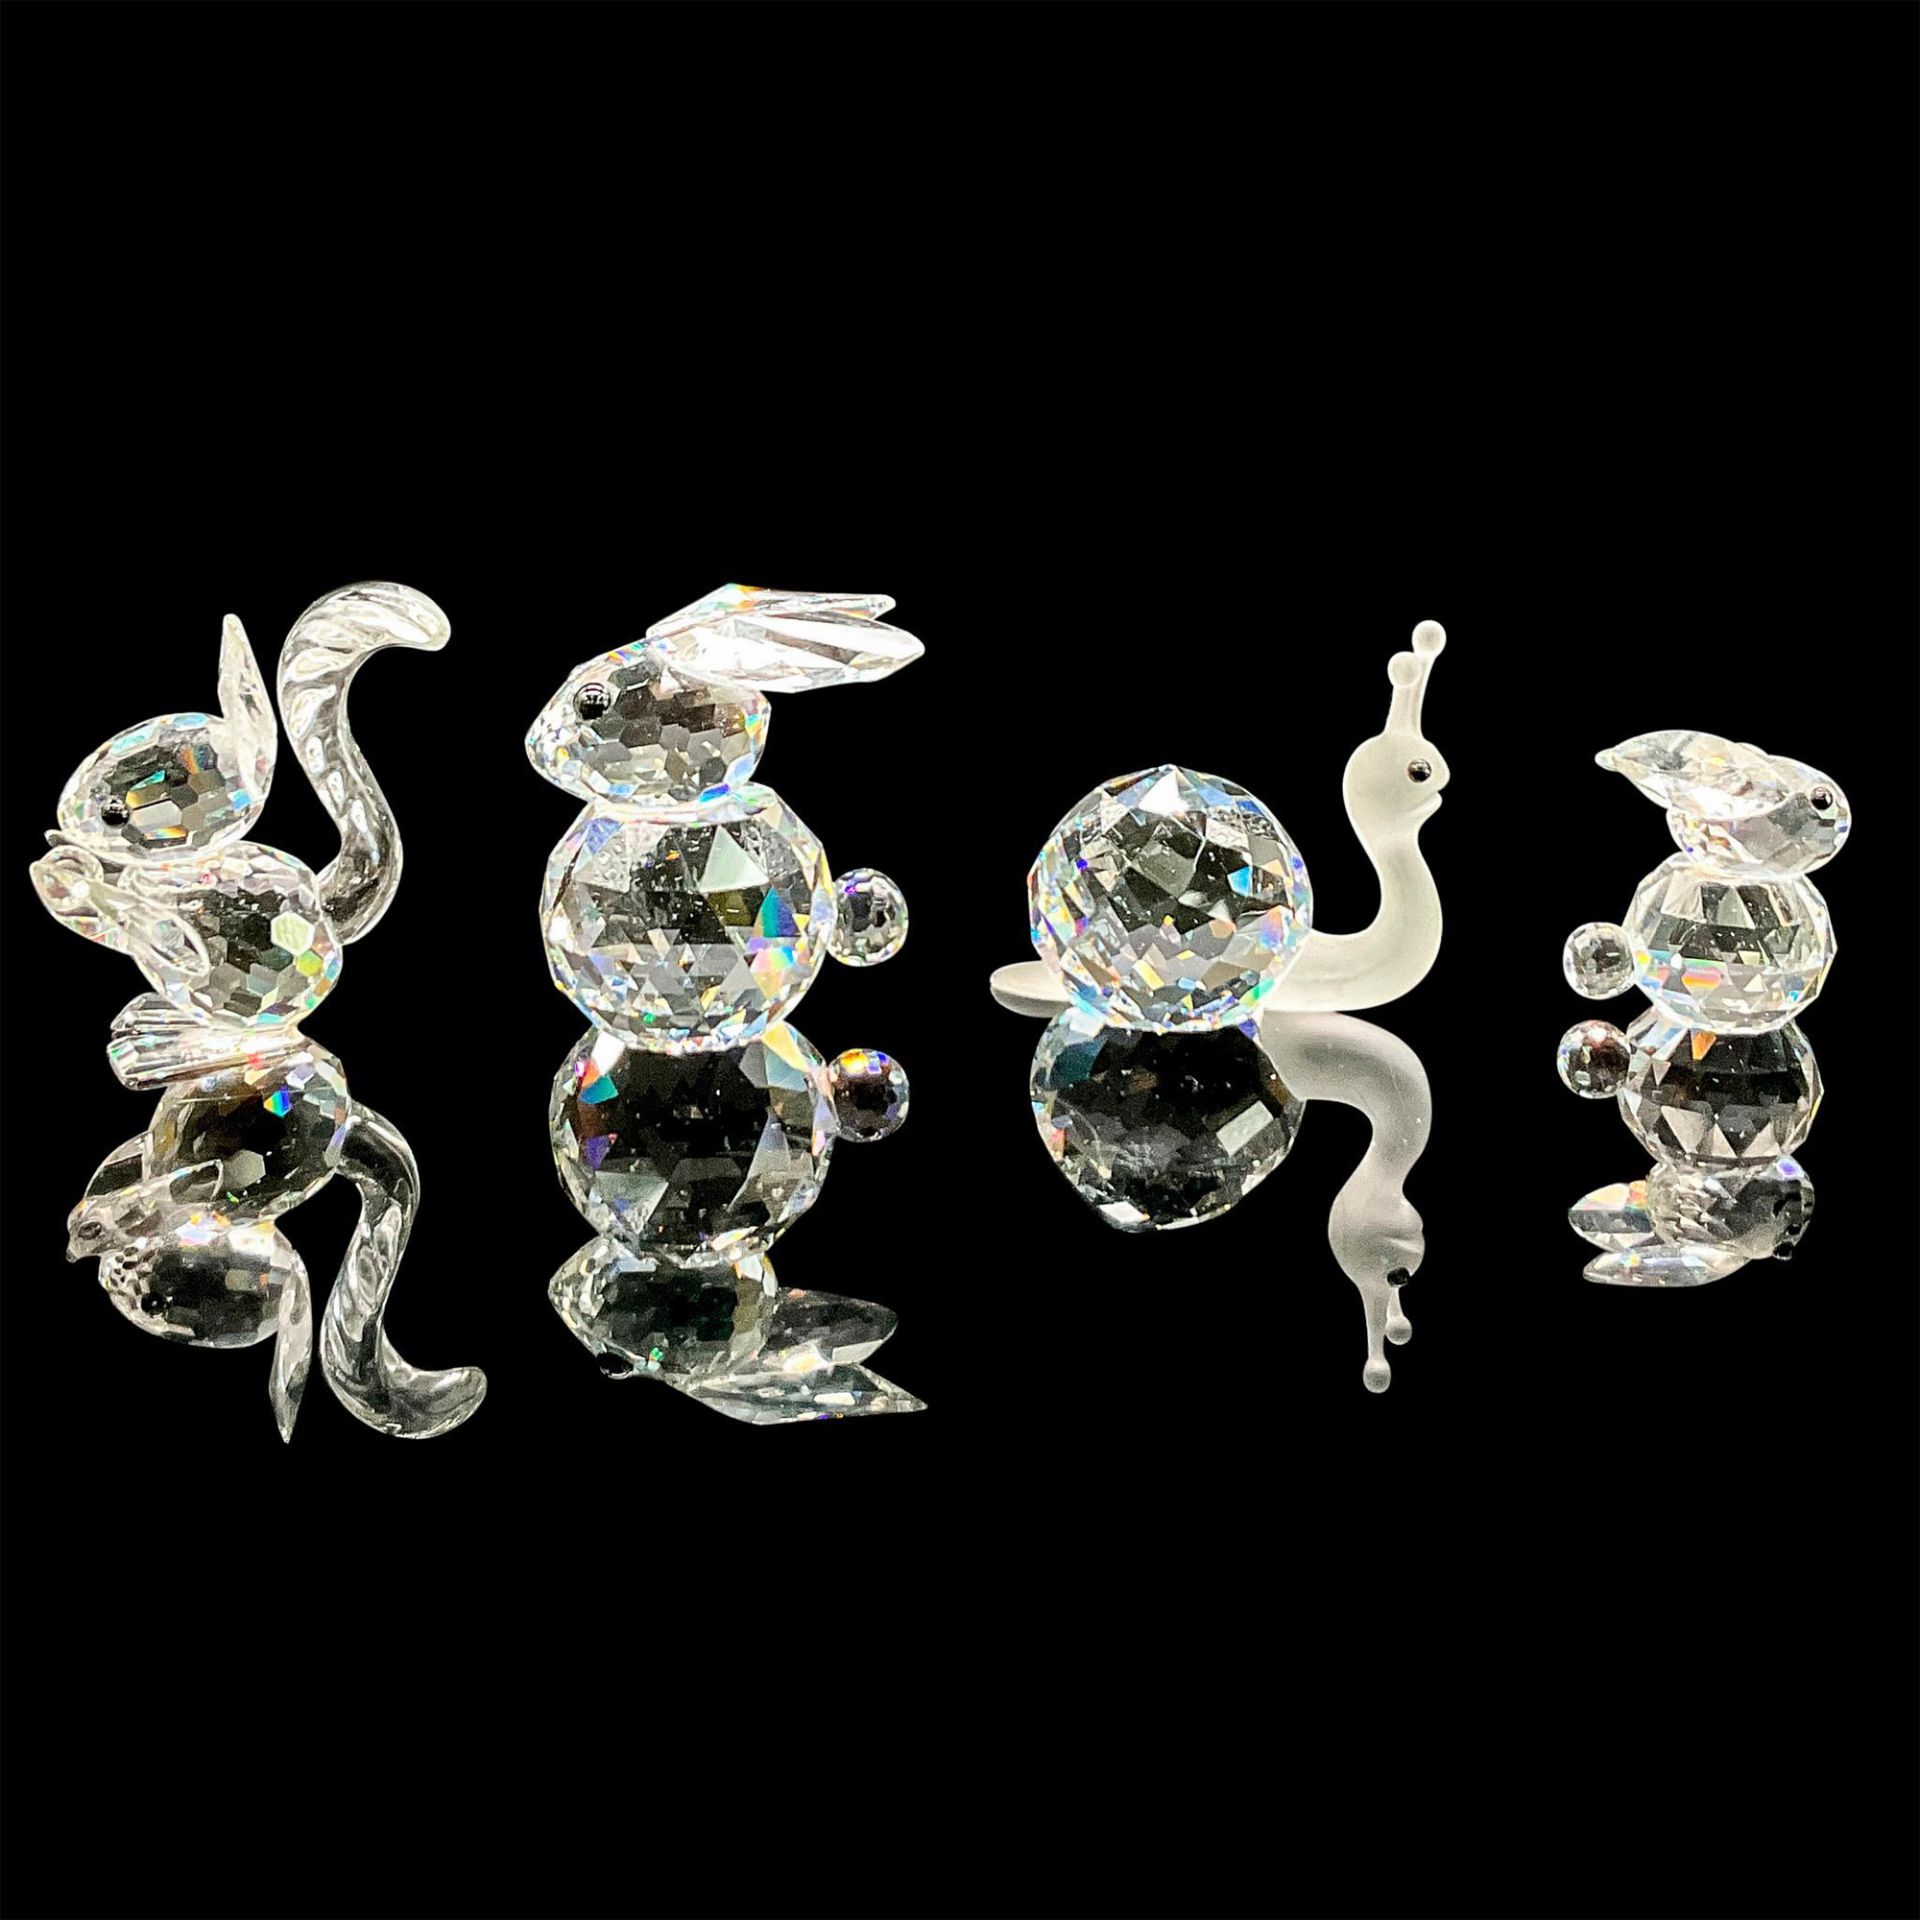 4pc Swarovski Crystal Swan Figurines, Rabbits/Squirrel/Snail - Image 2 of 3